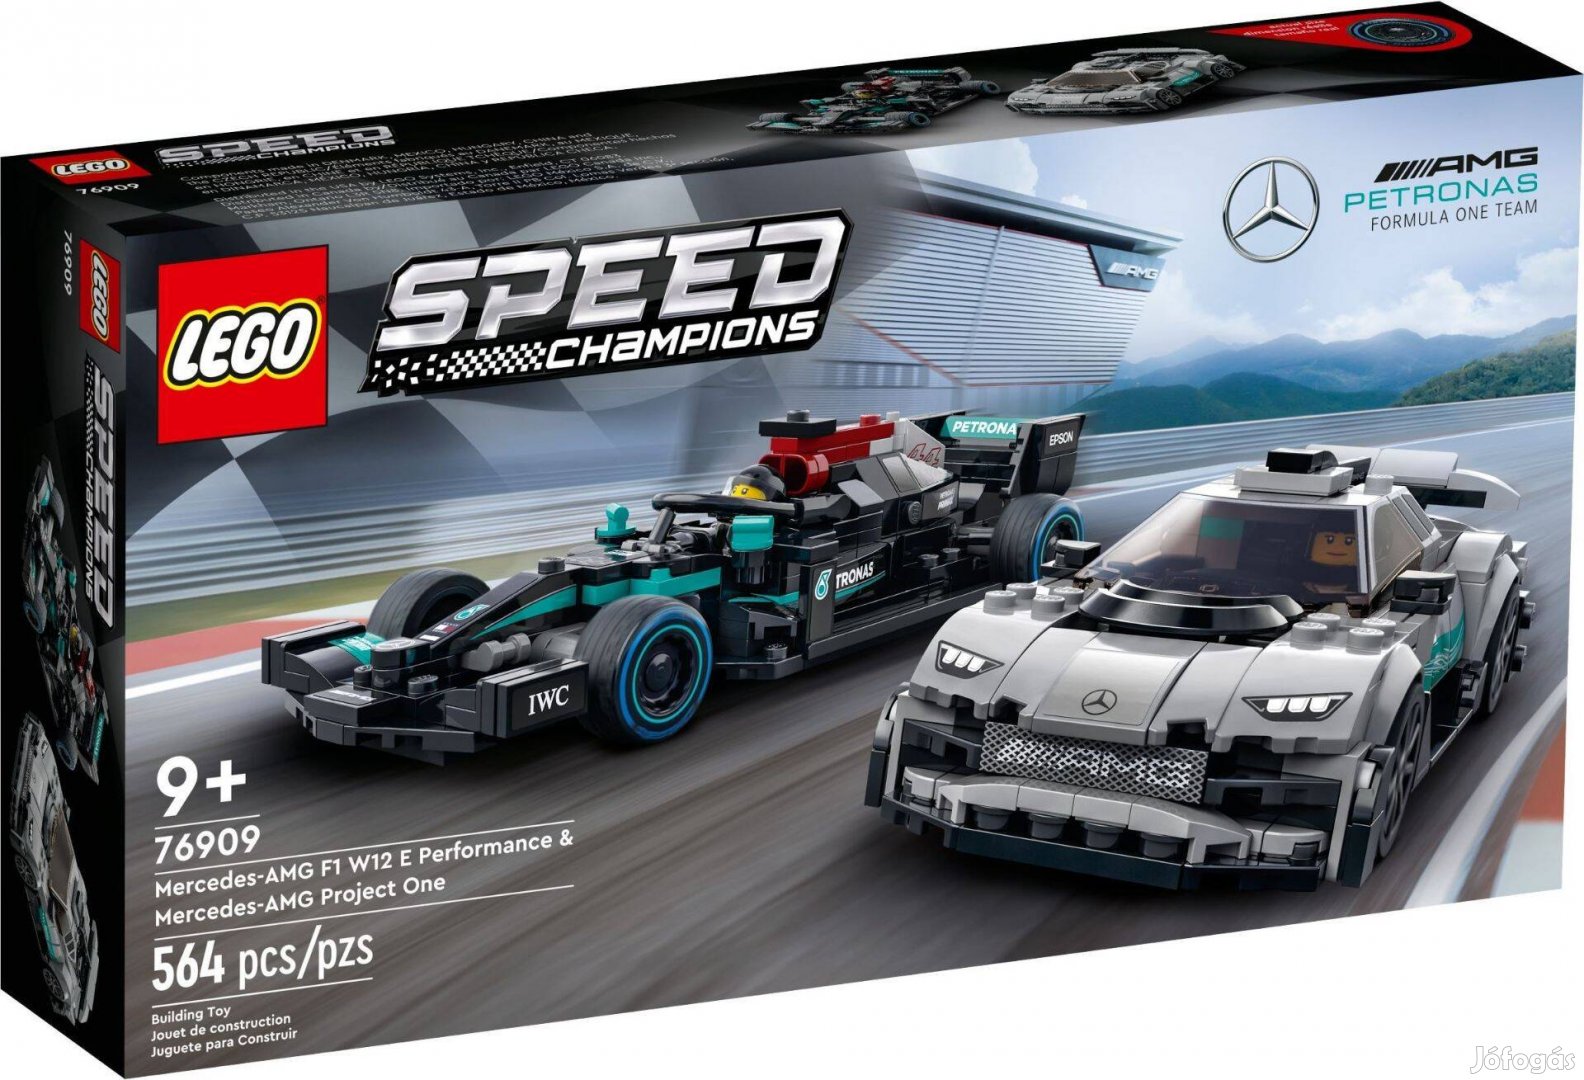 LEGO Speed Champions 76909 Mercedes-AMG F1 W12 E Performance & Mercede